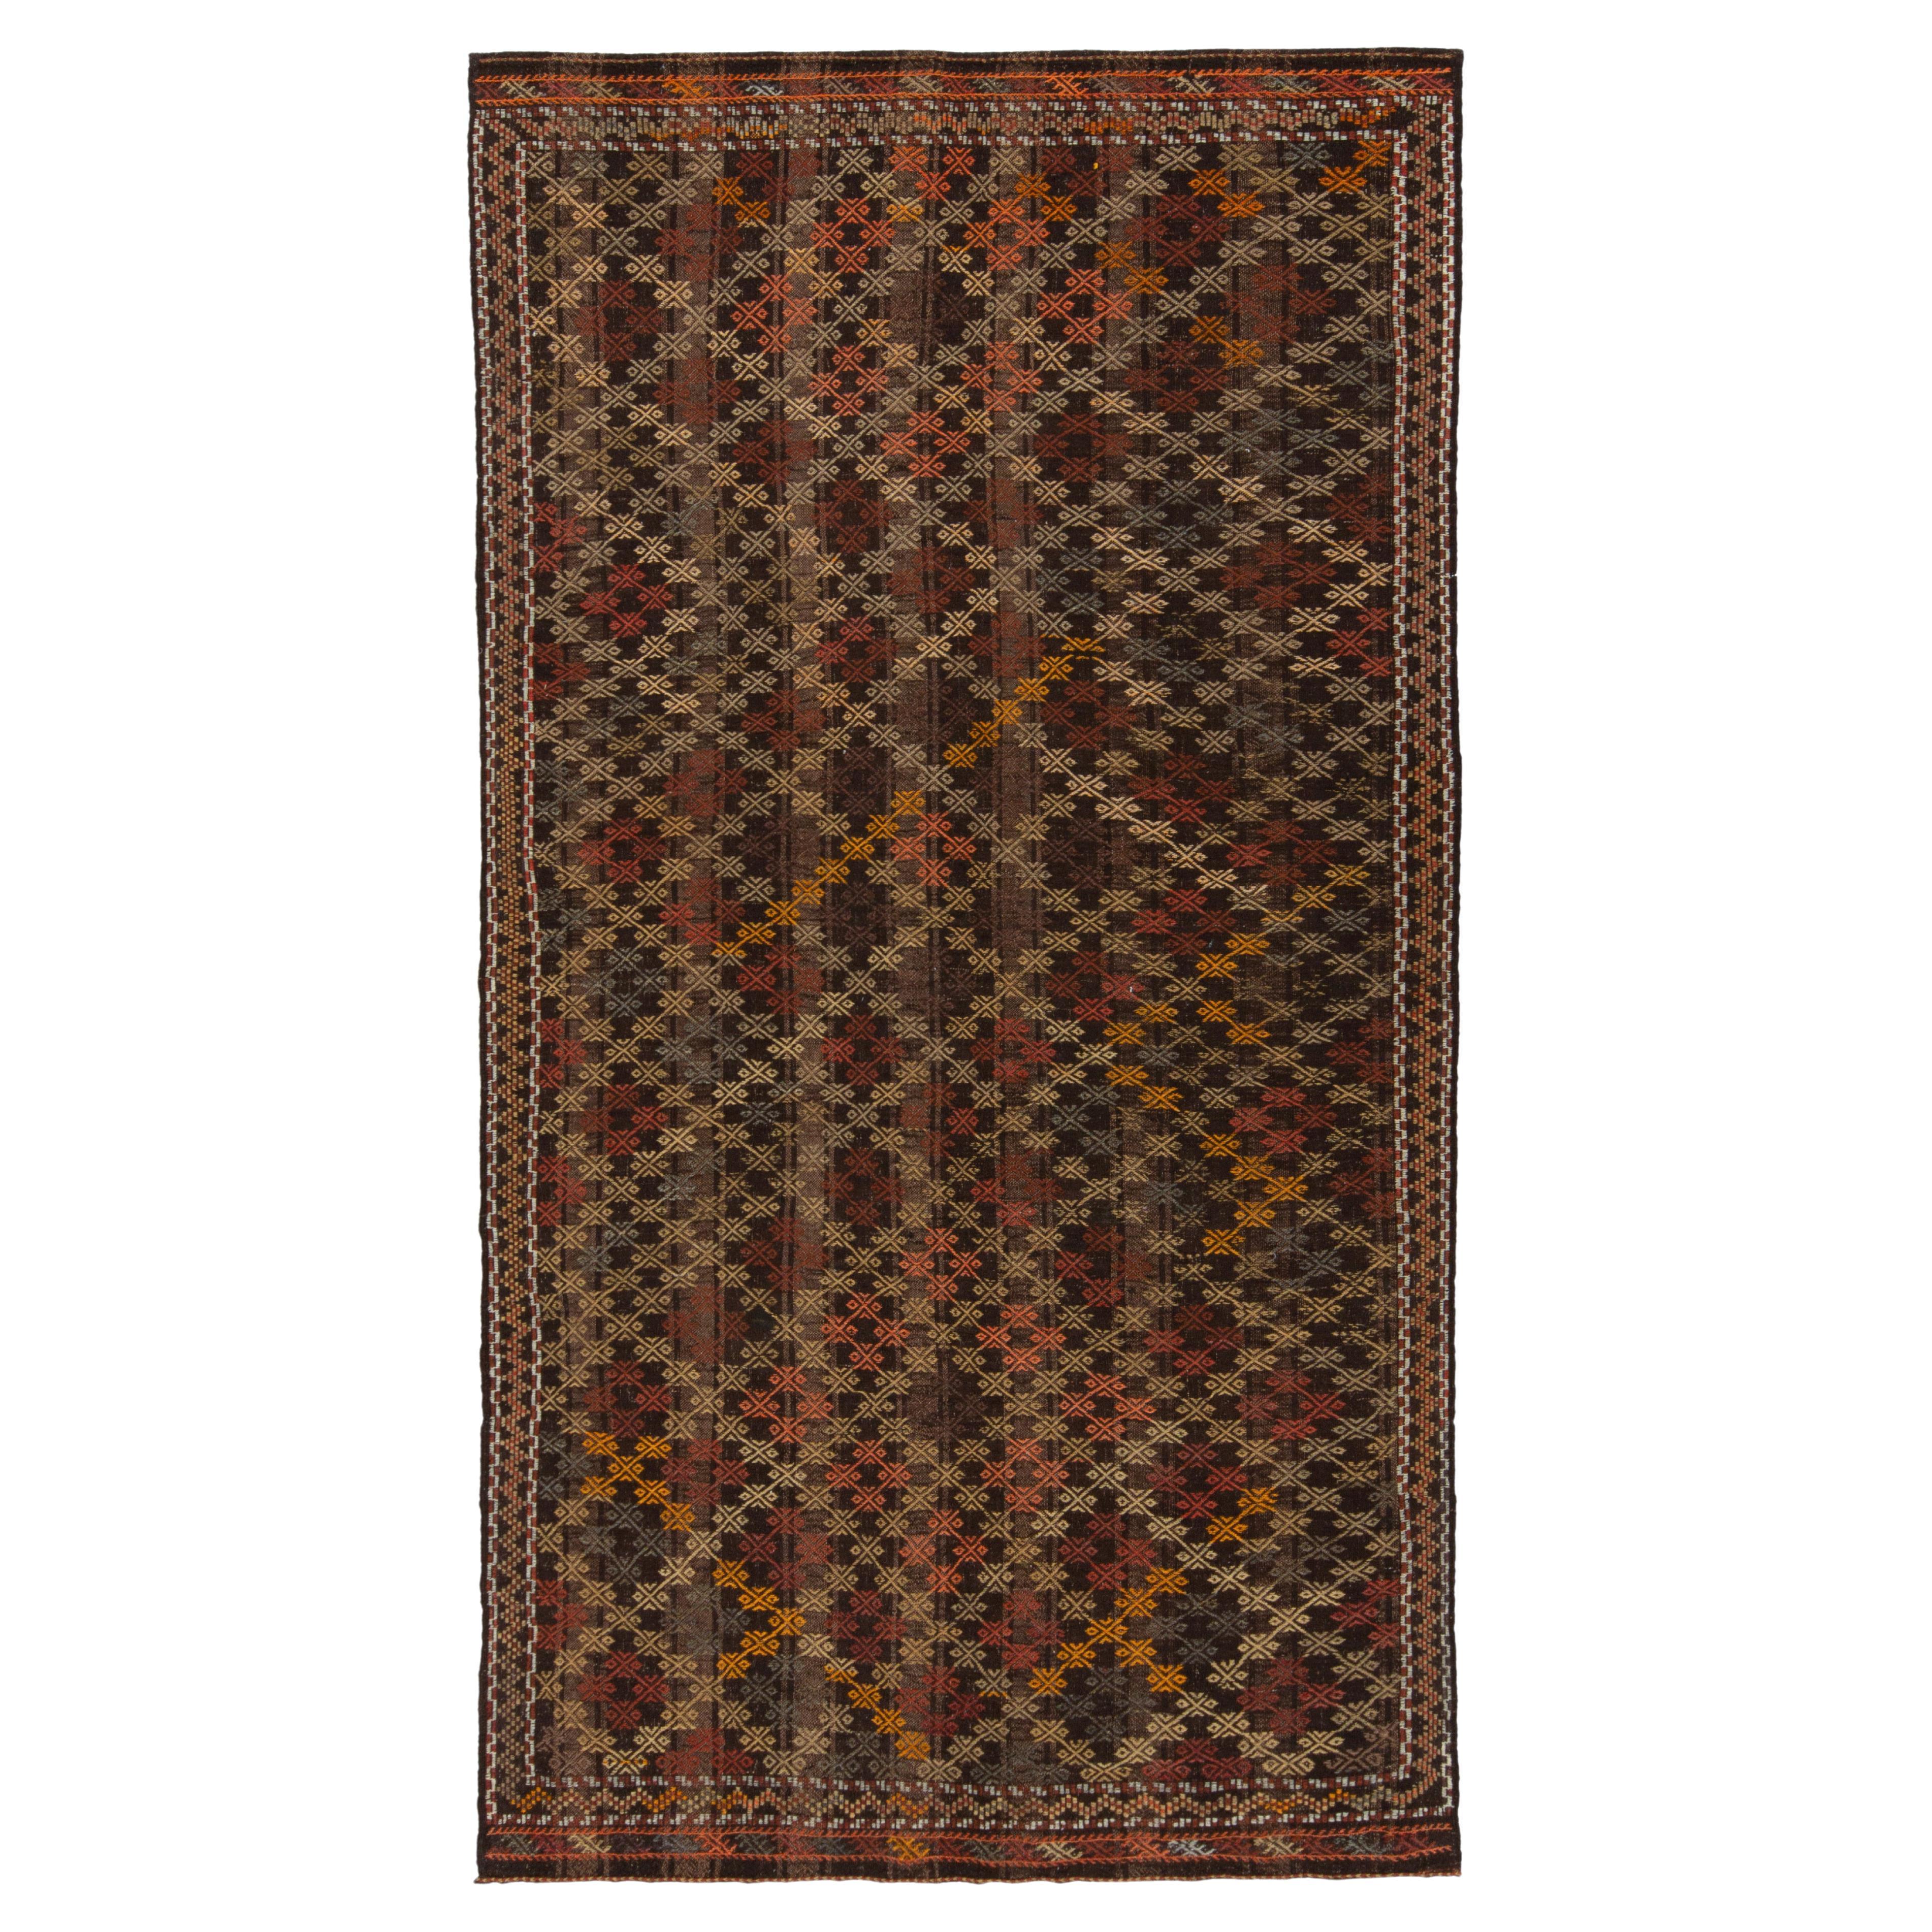 Vintage Cecim Kilim in Brown, Multicolor Geometric Tribal Pattern by Rug & Kilim